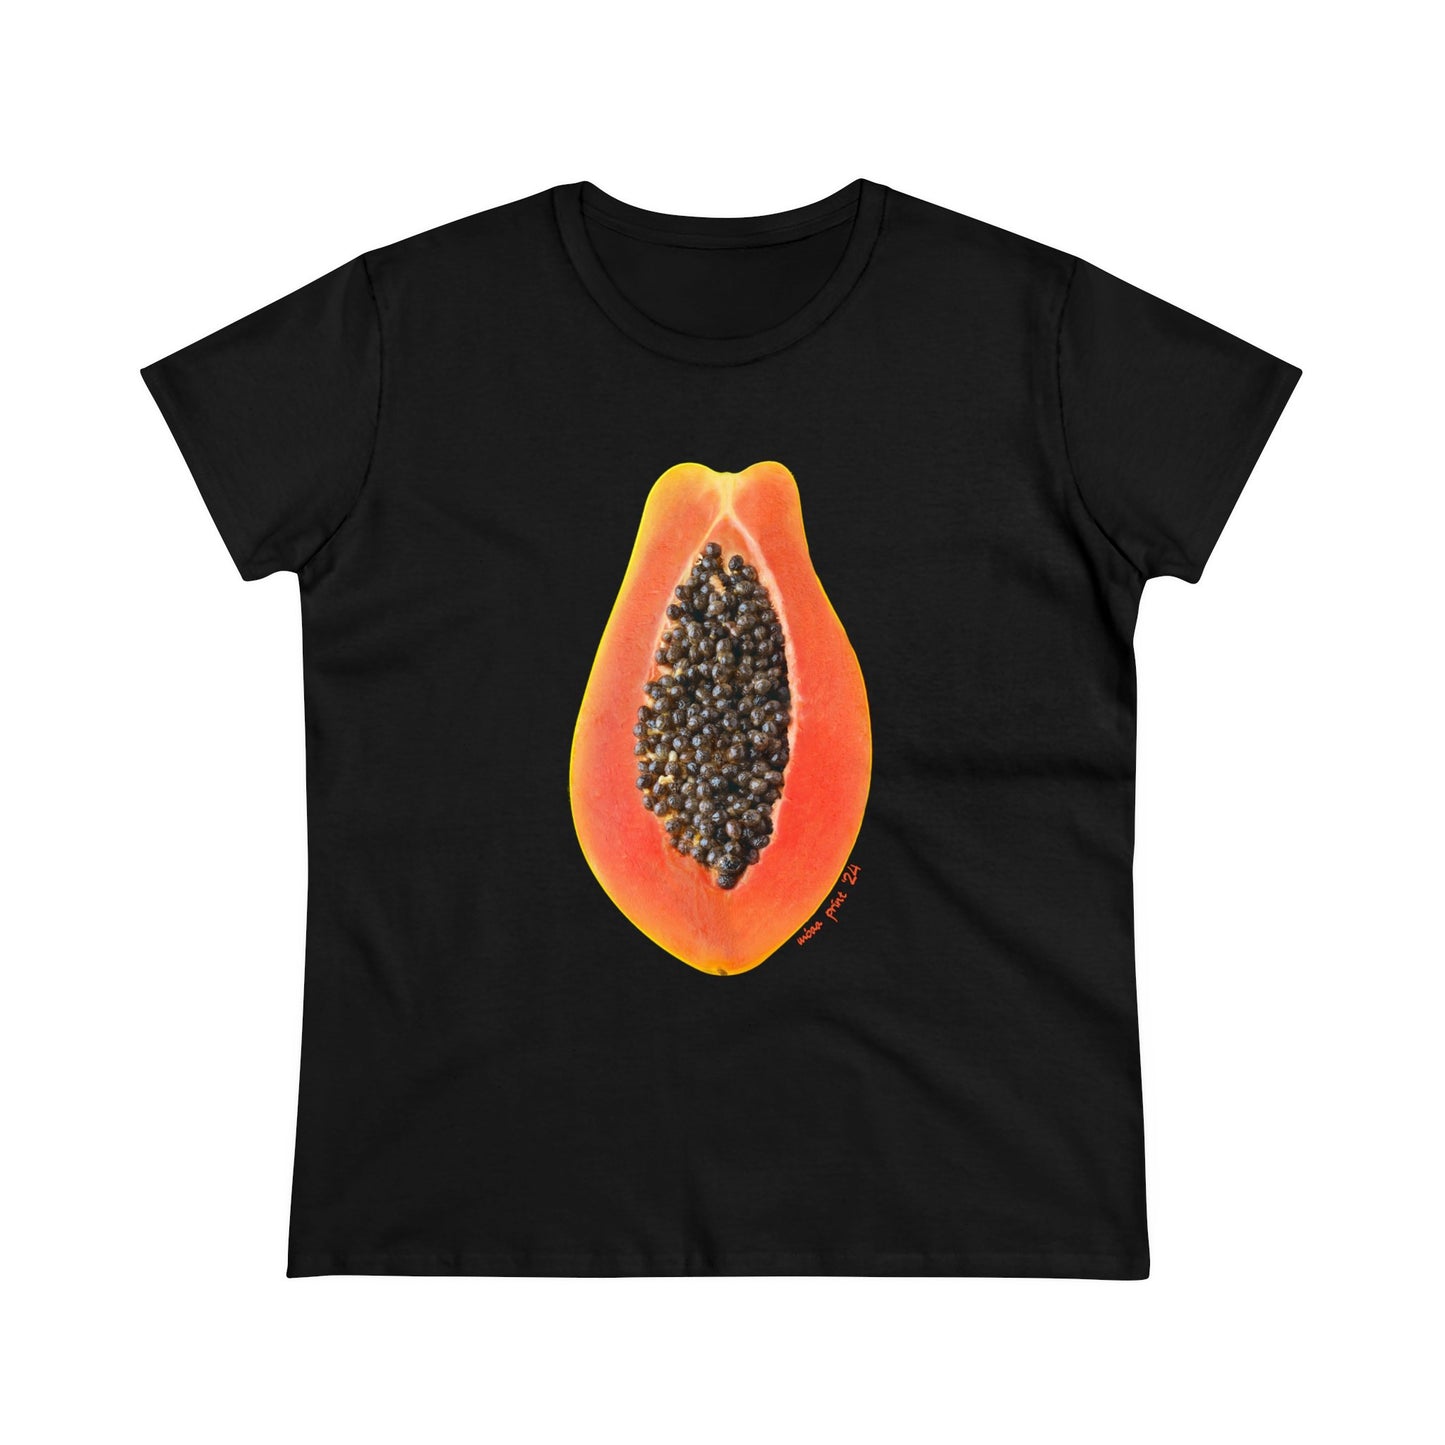 'Papaya' tee